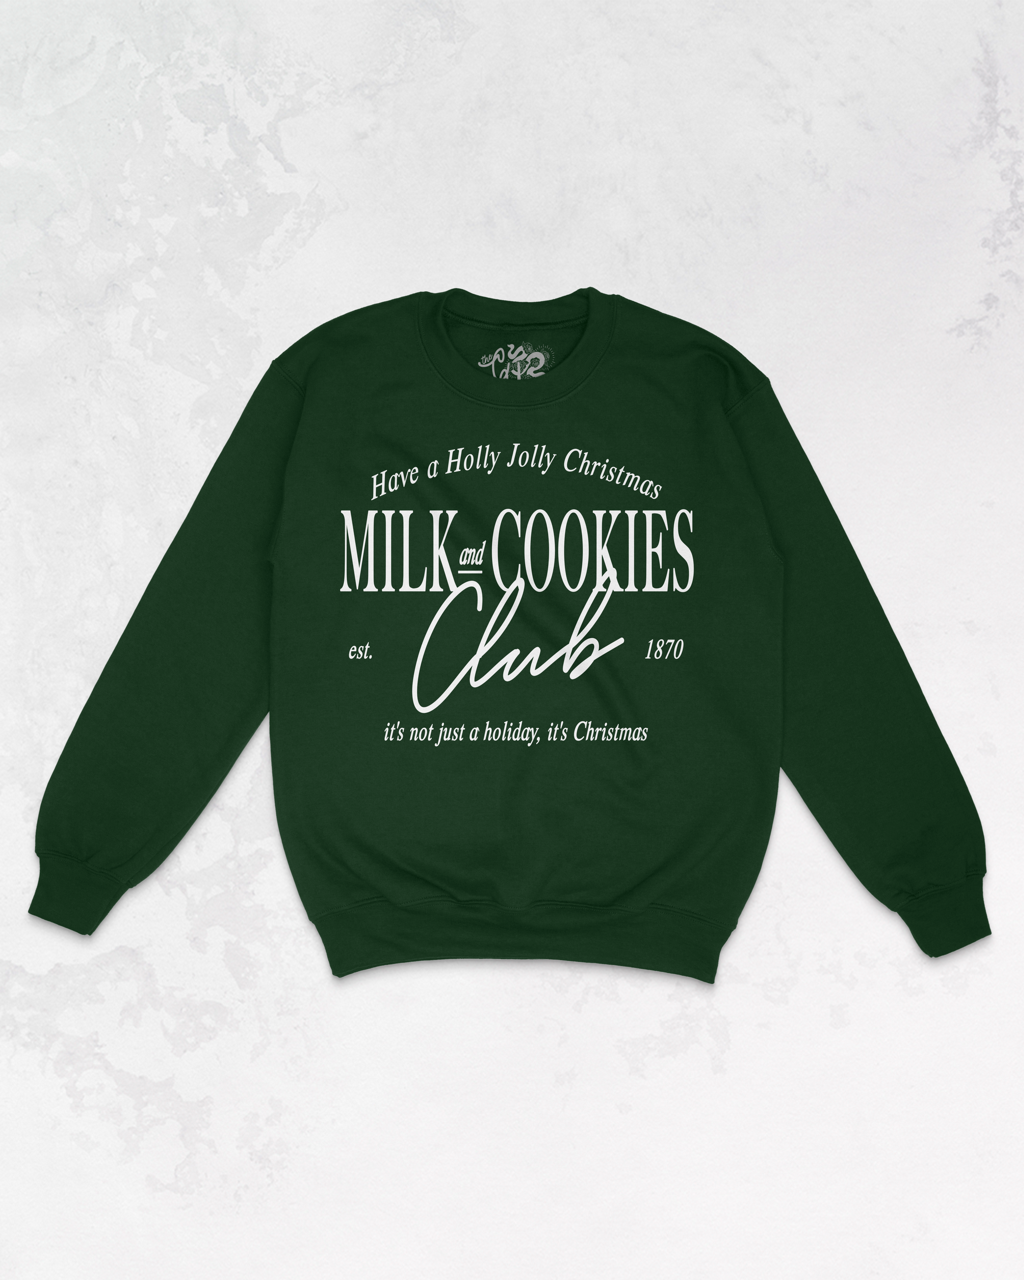 Underground Original Design: Milk & Cookies Club Oversized 90's Sweatshirt